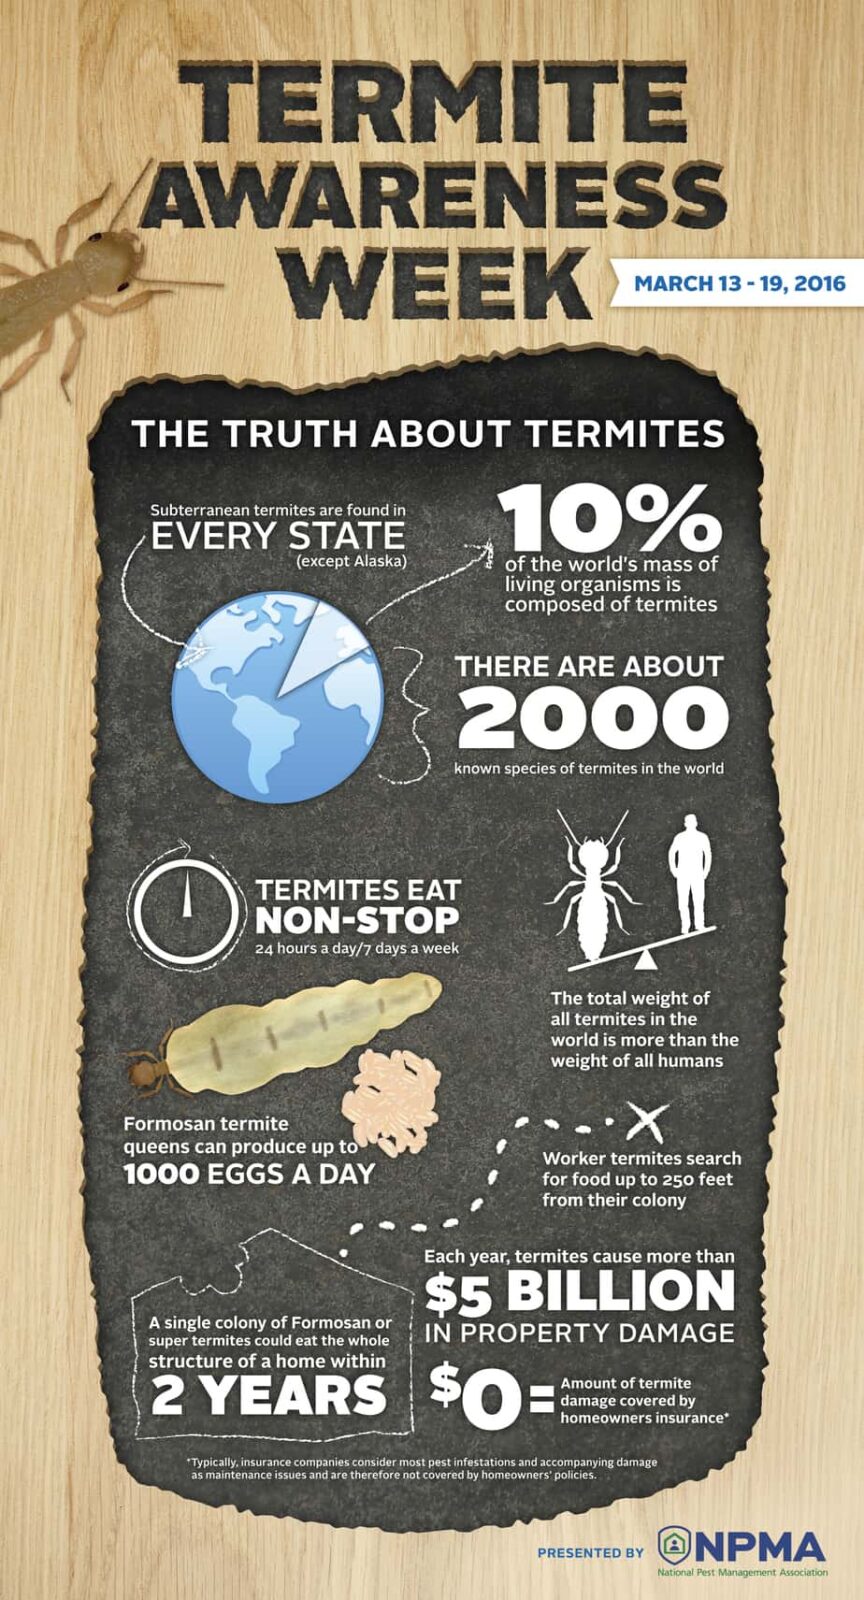 termite awareness week infographic 2016